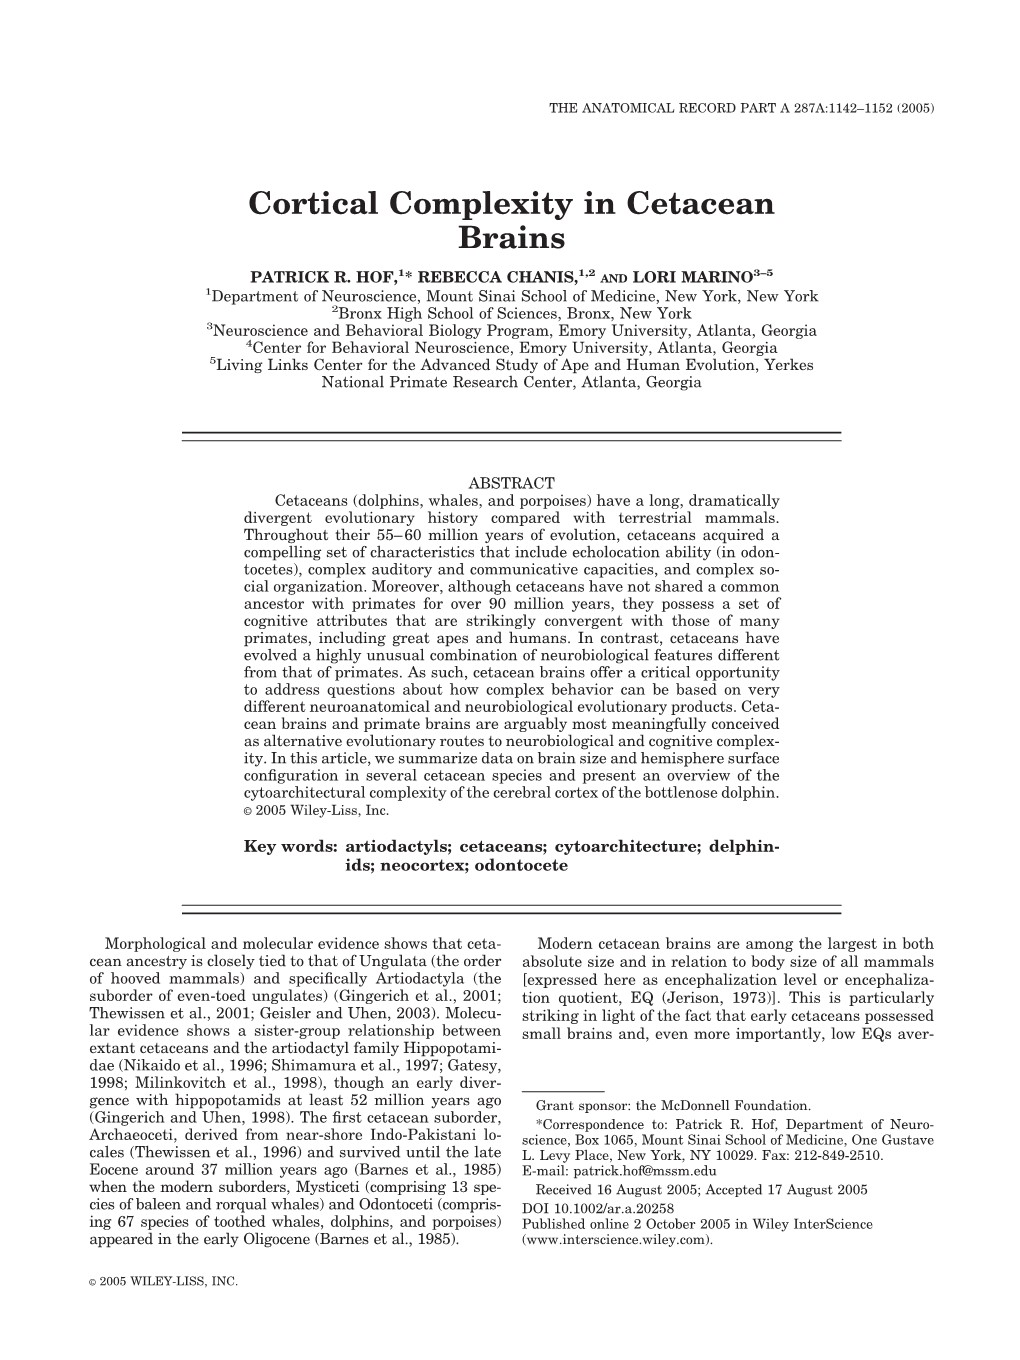 Cortical Complexity in Cetacean Brains